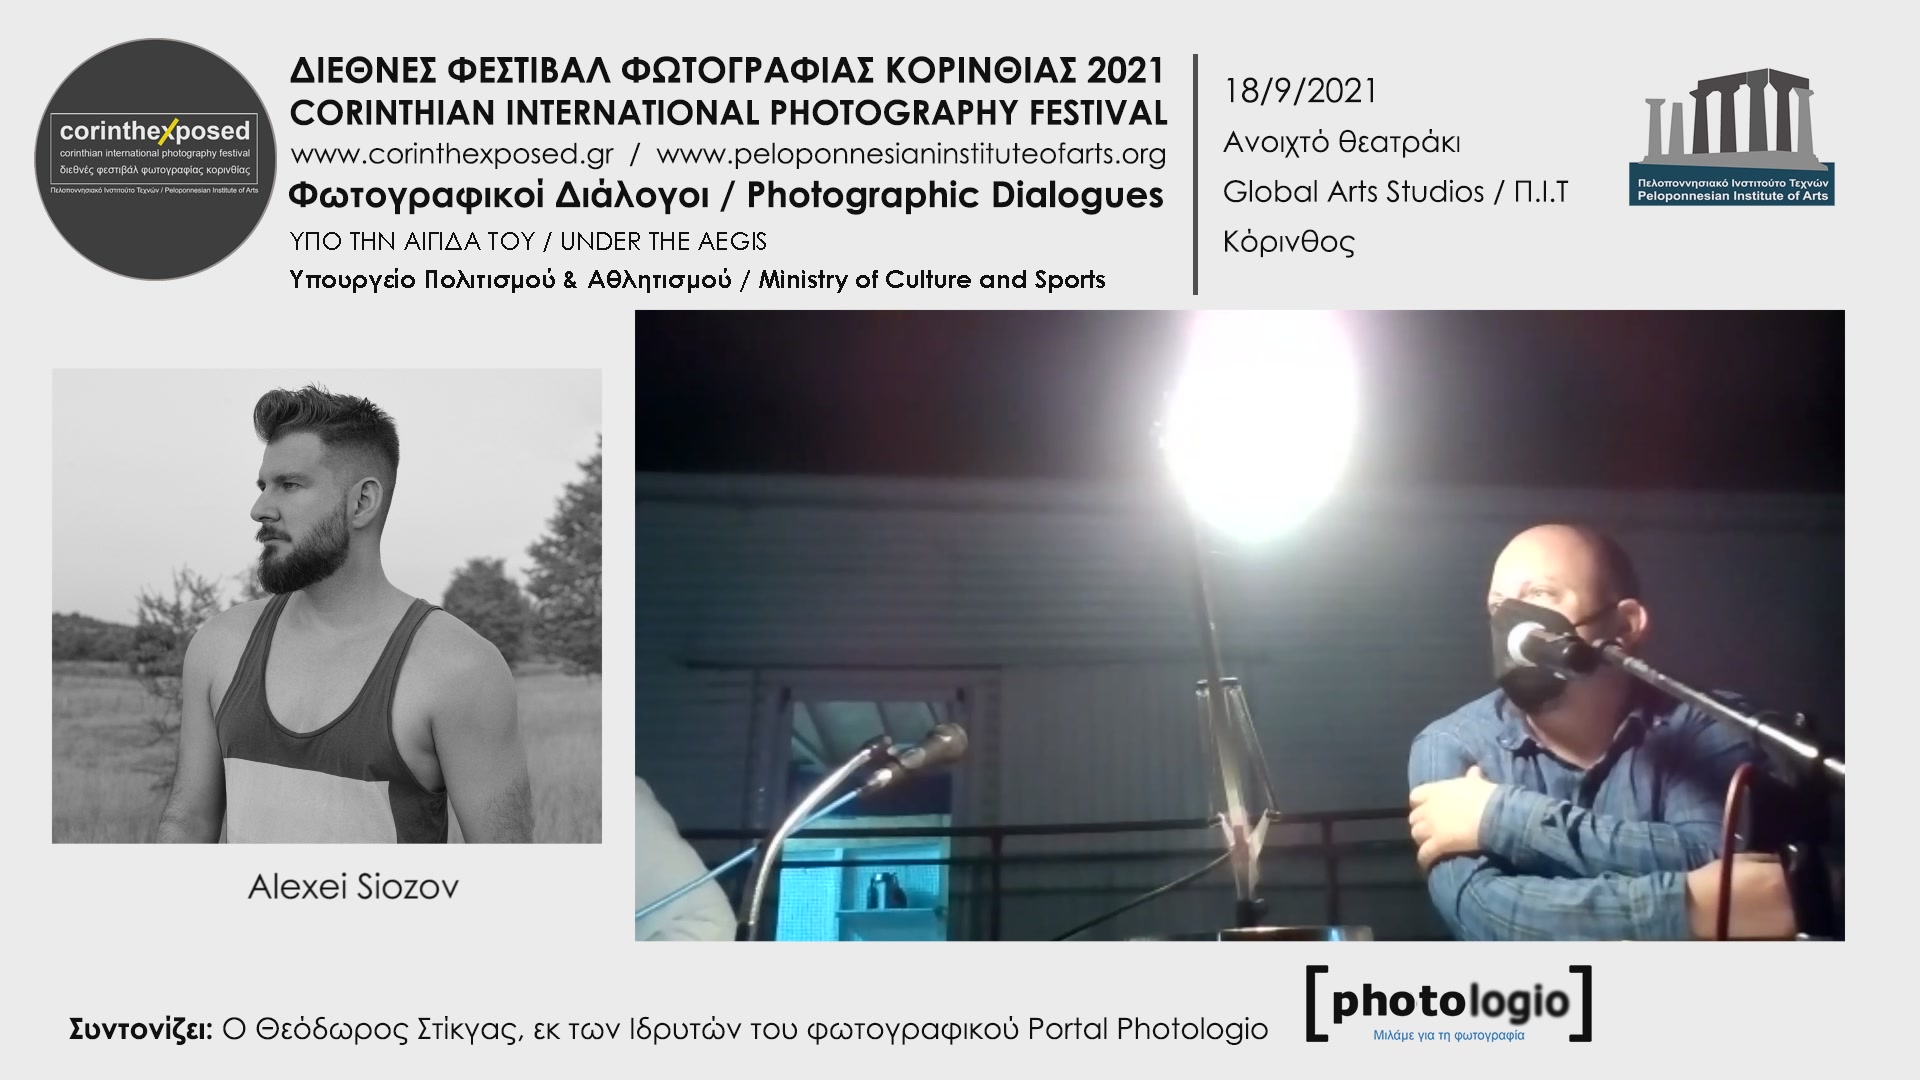 Alexei Siozov presented by Photologio - Photographic dialogs 2021 (video)